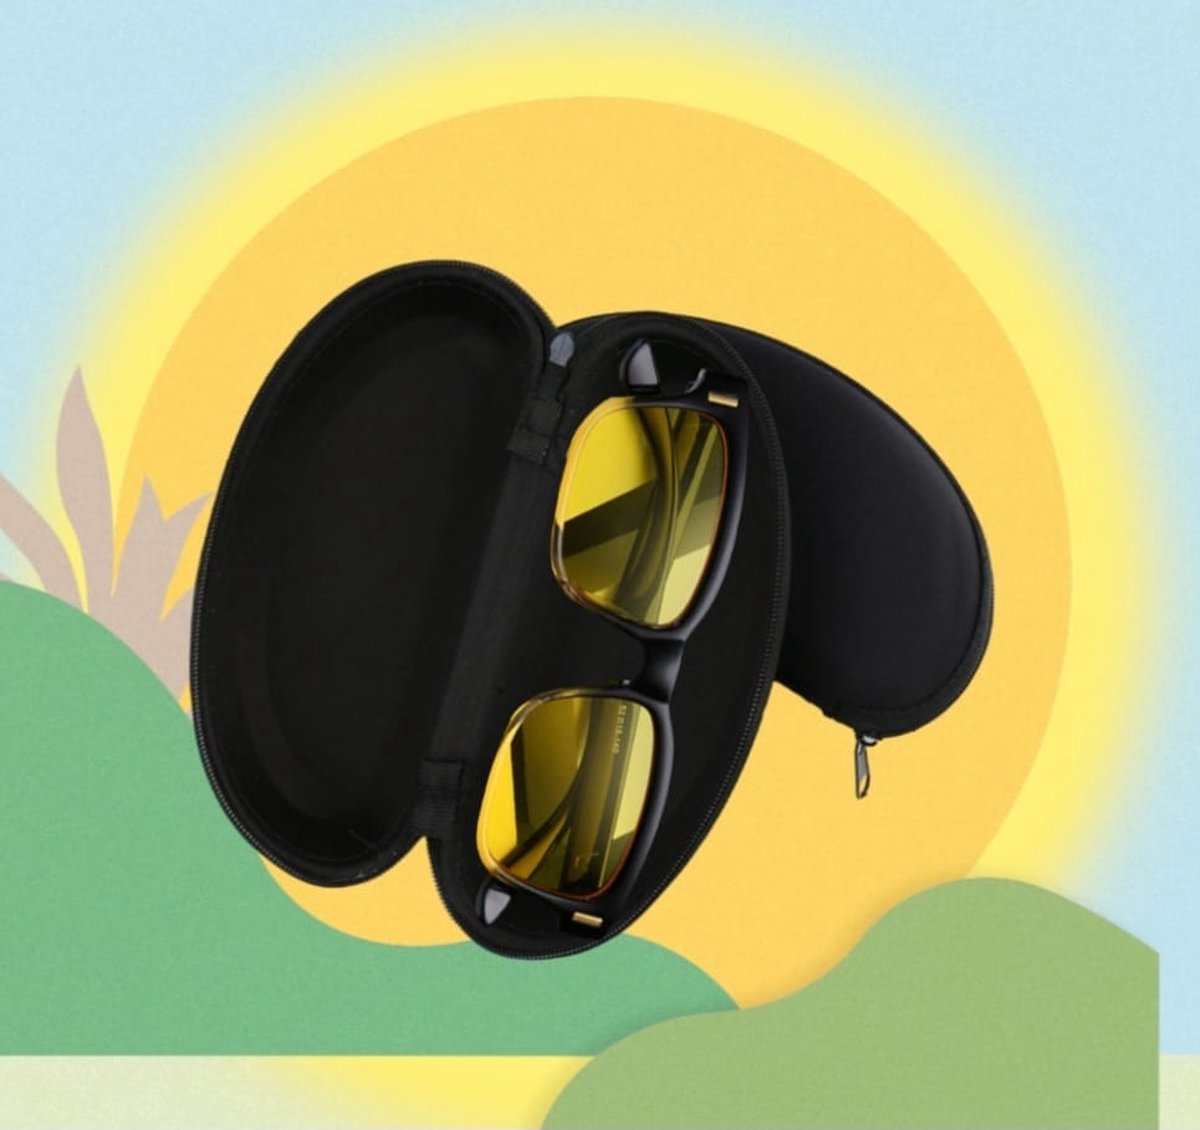 Nachtbril - Overzetbril - Autobril - Geel Getinte Bril - Veilig Rijden -  Avondbril -... | bol.com